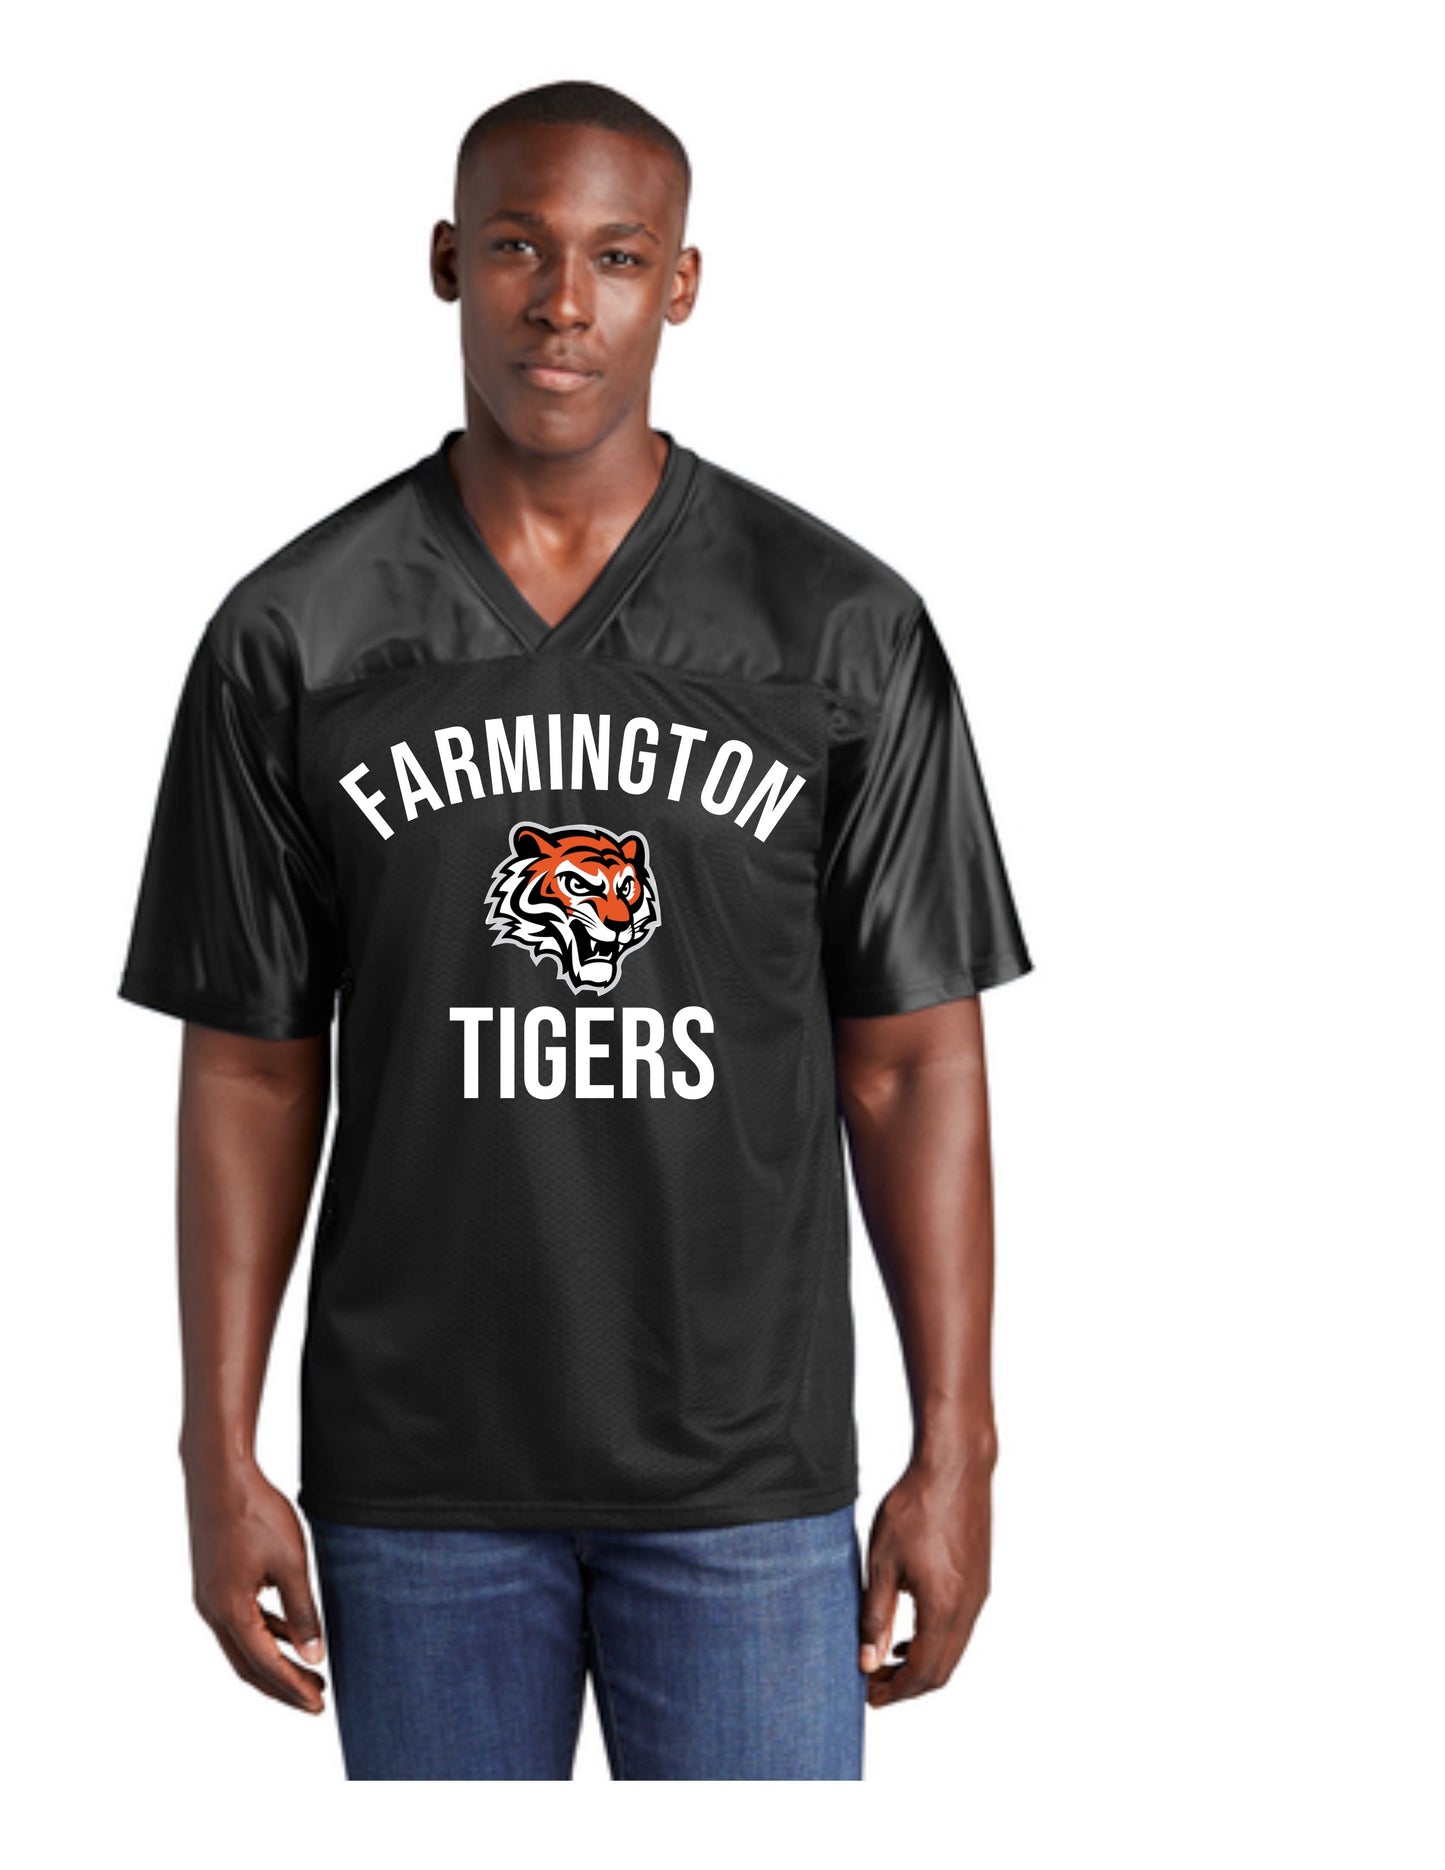 Farmington Tigers Football Jersey